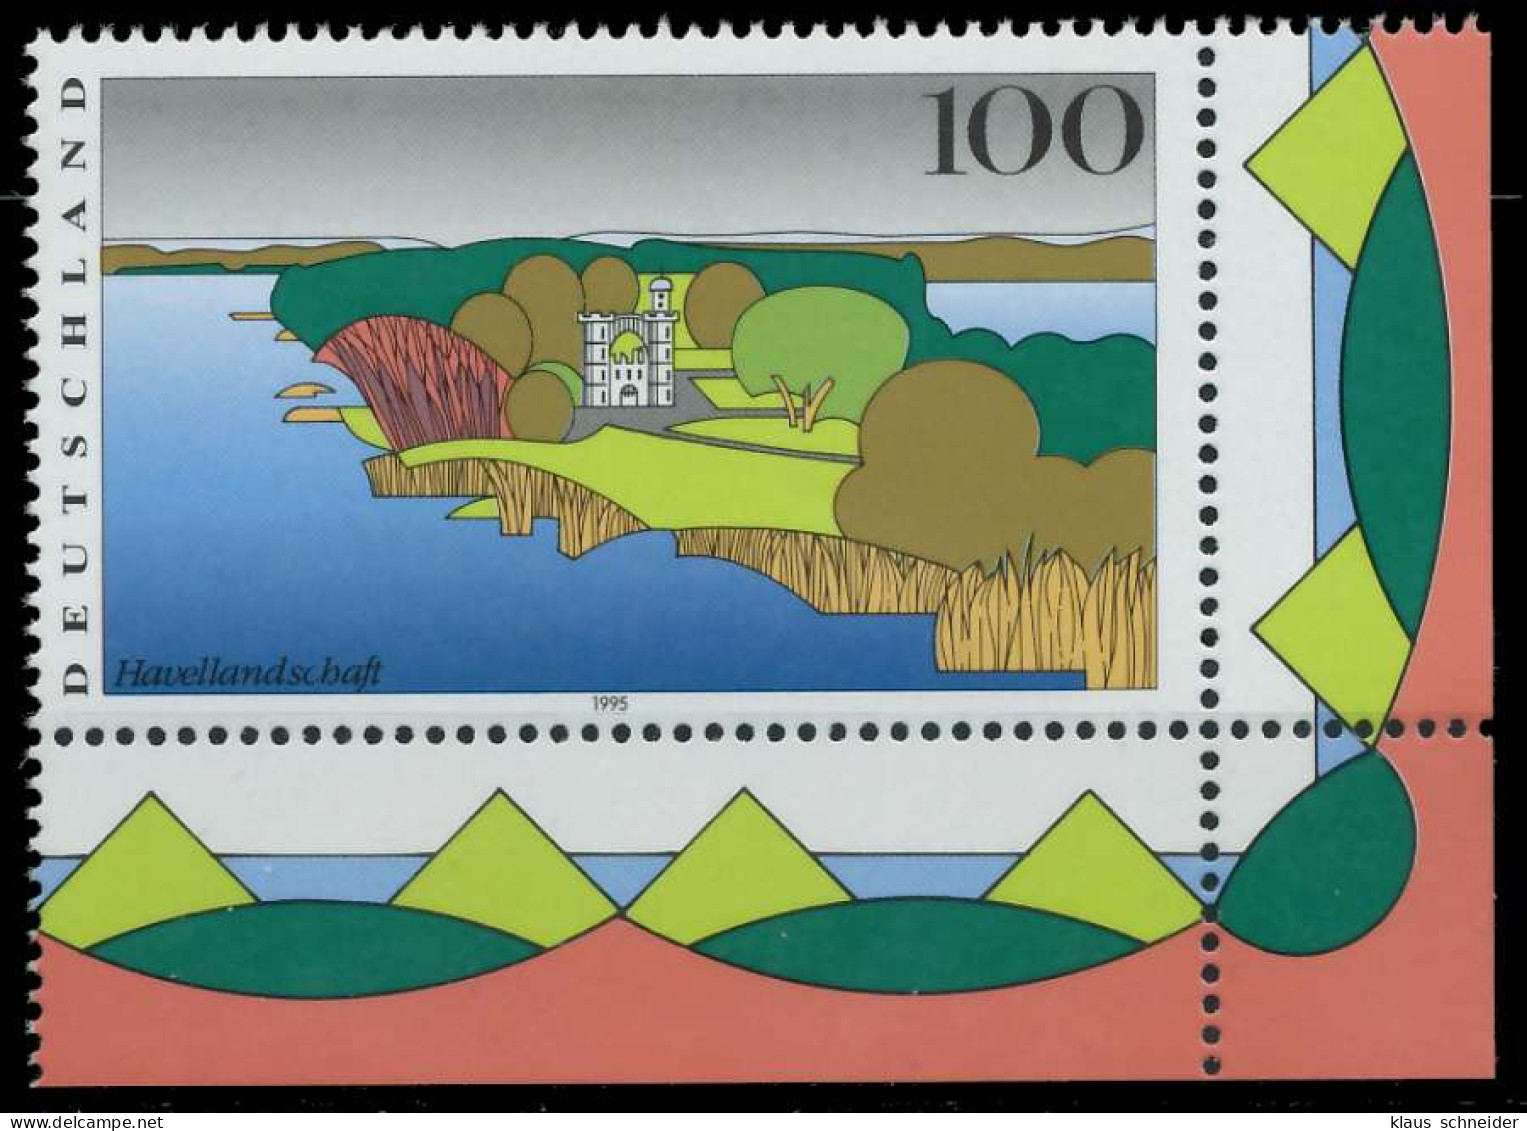 BRD 1995 Nr 1808 Postfrisch ECKE-URE X8673E6 - Unused Stamps